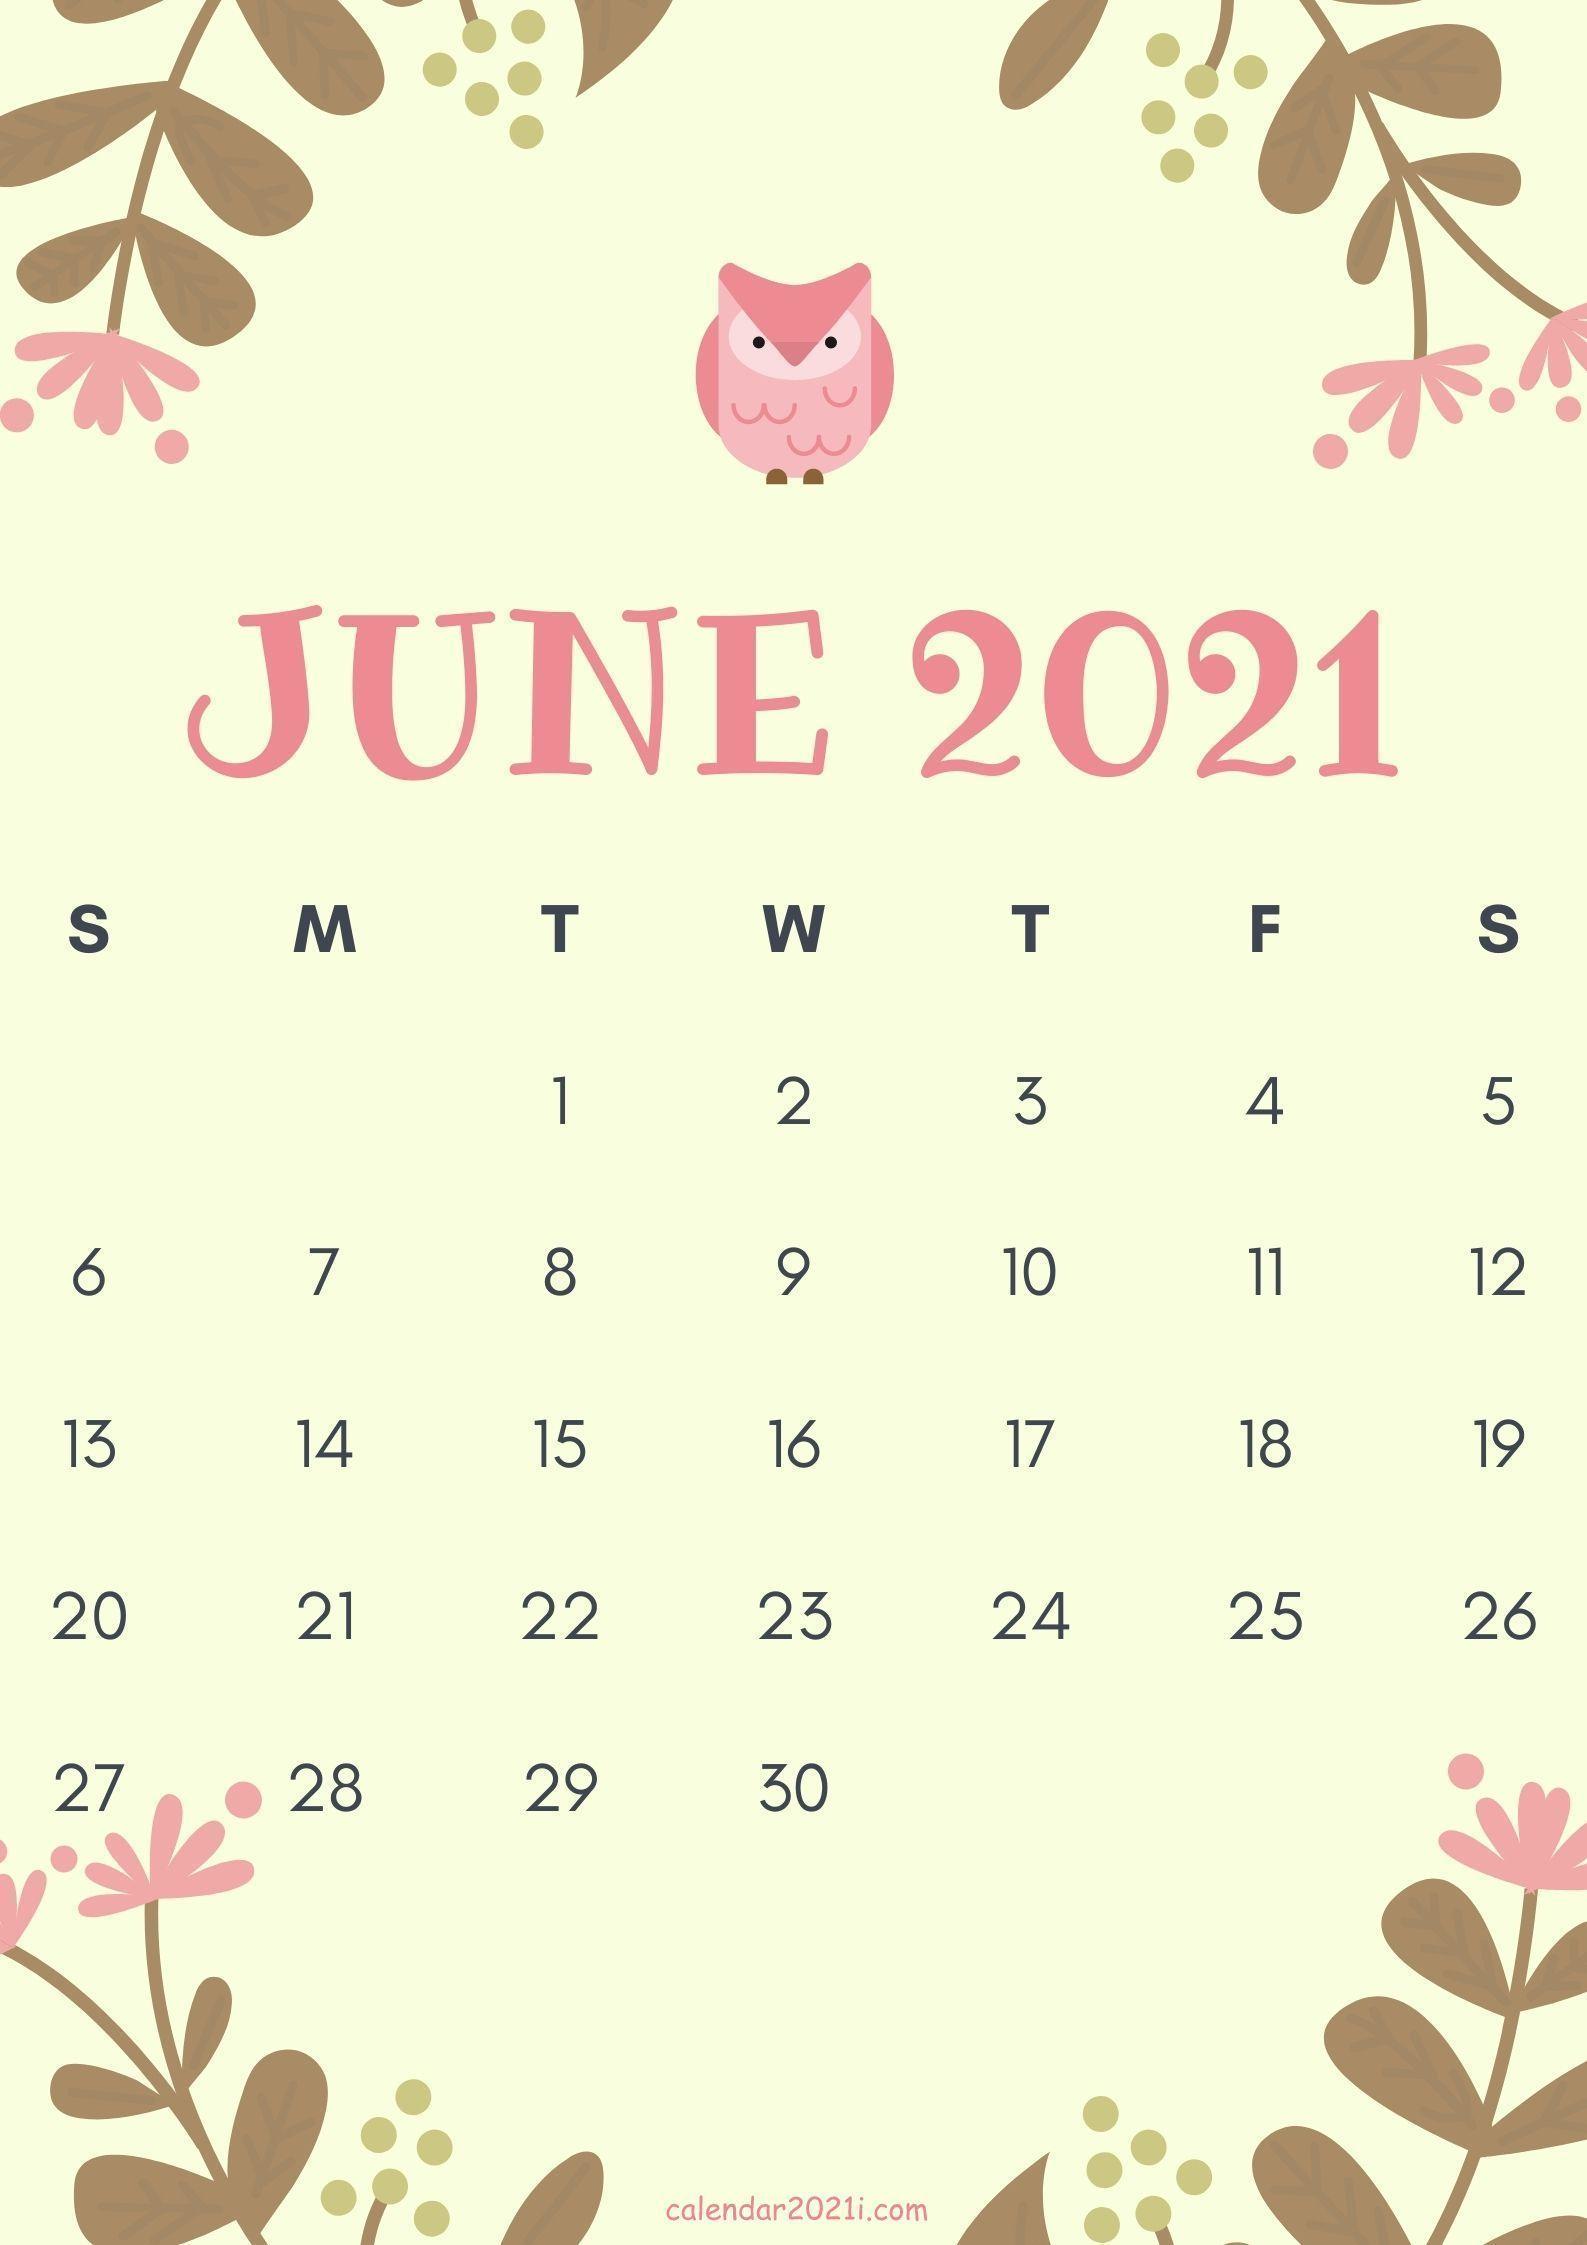 June 2021 Calendar Wallpapers Top Free June 2021 Calendar Backgrounds